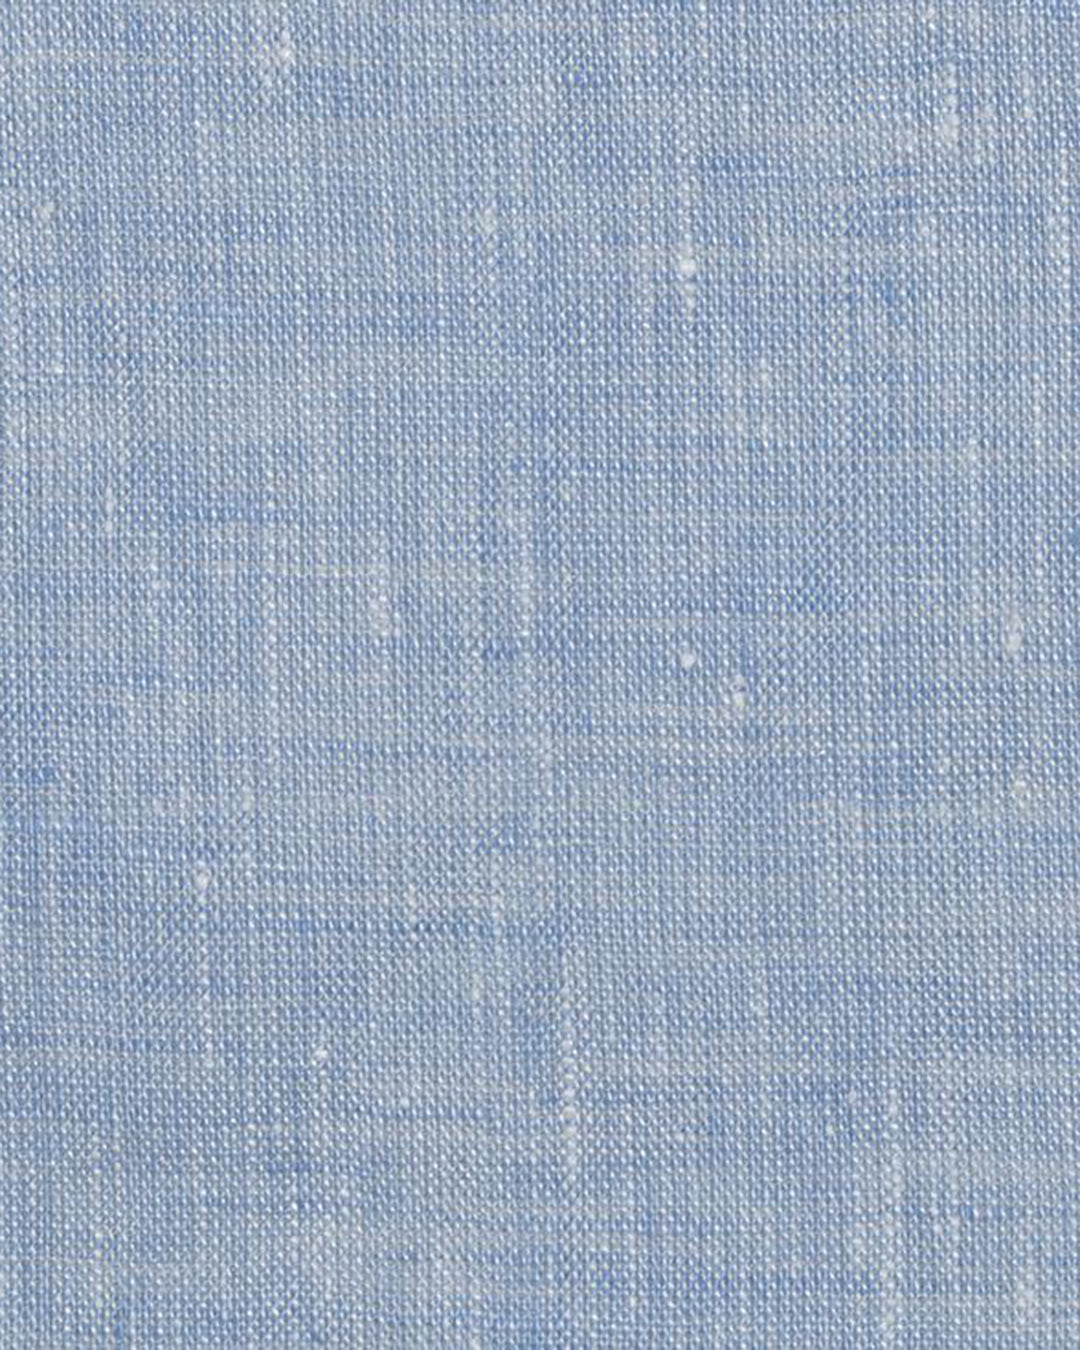 Linen 60's: Light blue